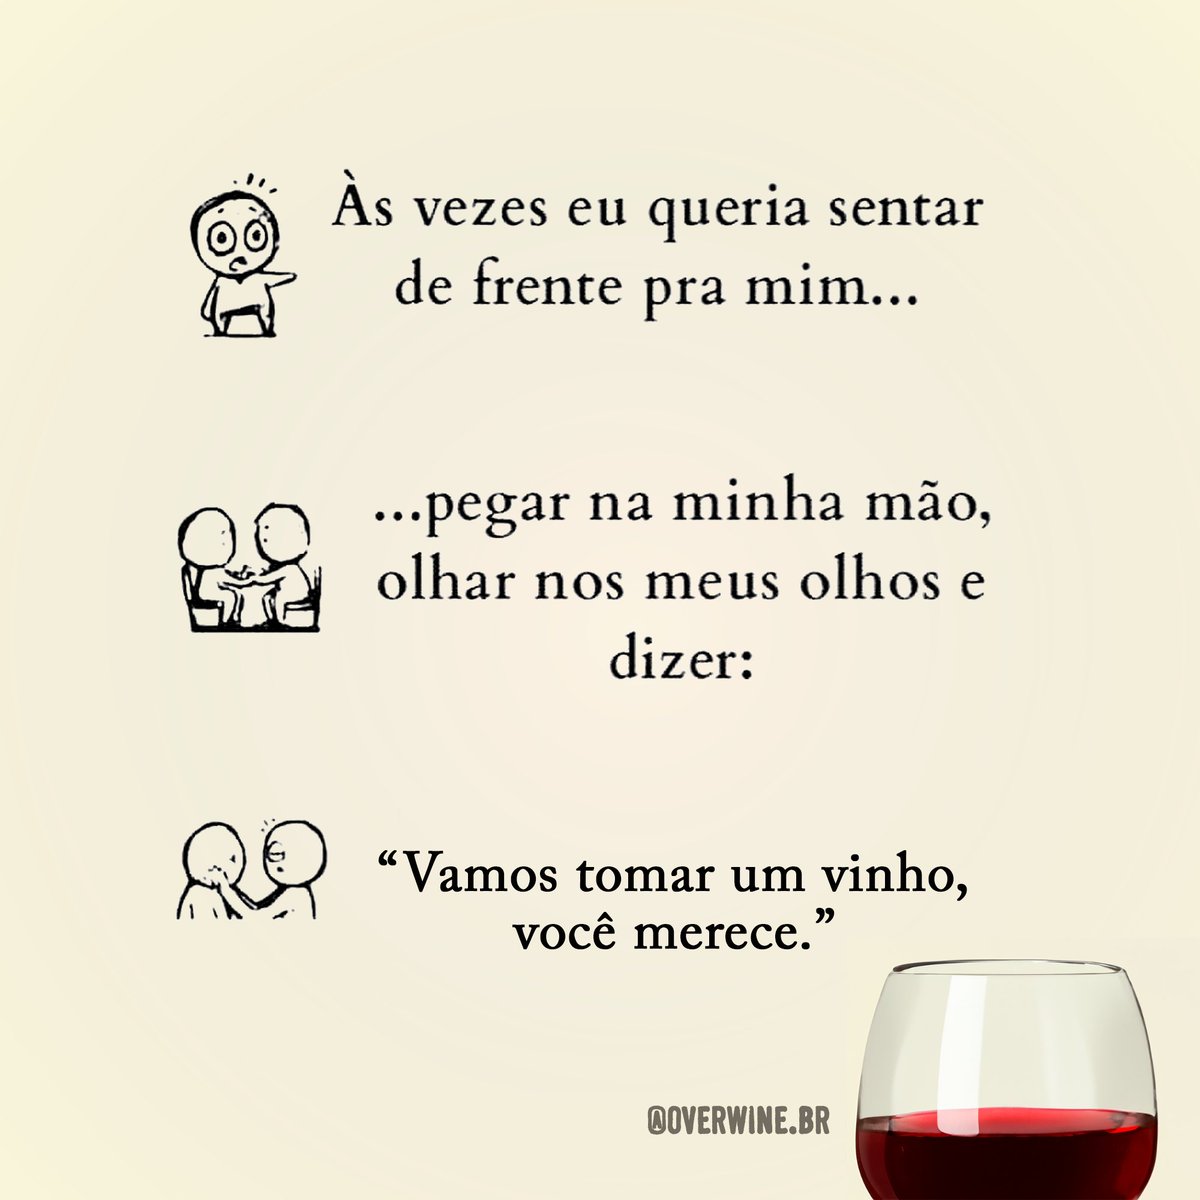 Desse jeito!😄😅🍷
•
•
•
#ilovewine #wine #sommelier #amovinho #degustacaodevinhos #drinkwine #vinhotinto #vinhozinho #vinhobom #vinhobranco #vinhotinto #vinhoreservado #vinhoportuguês #vinhotintosuave #queijosevinhos #degustacaodevinhos #tabuasdefrios #sextou